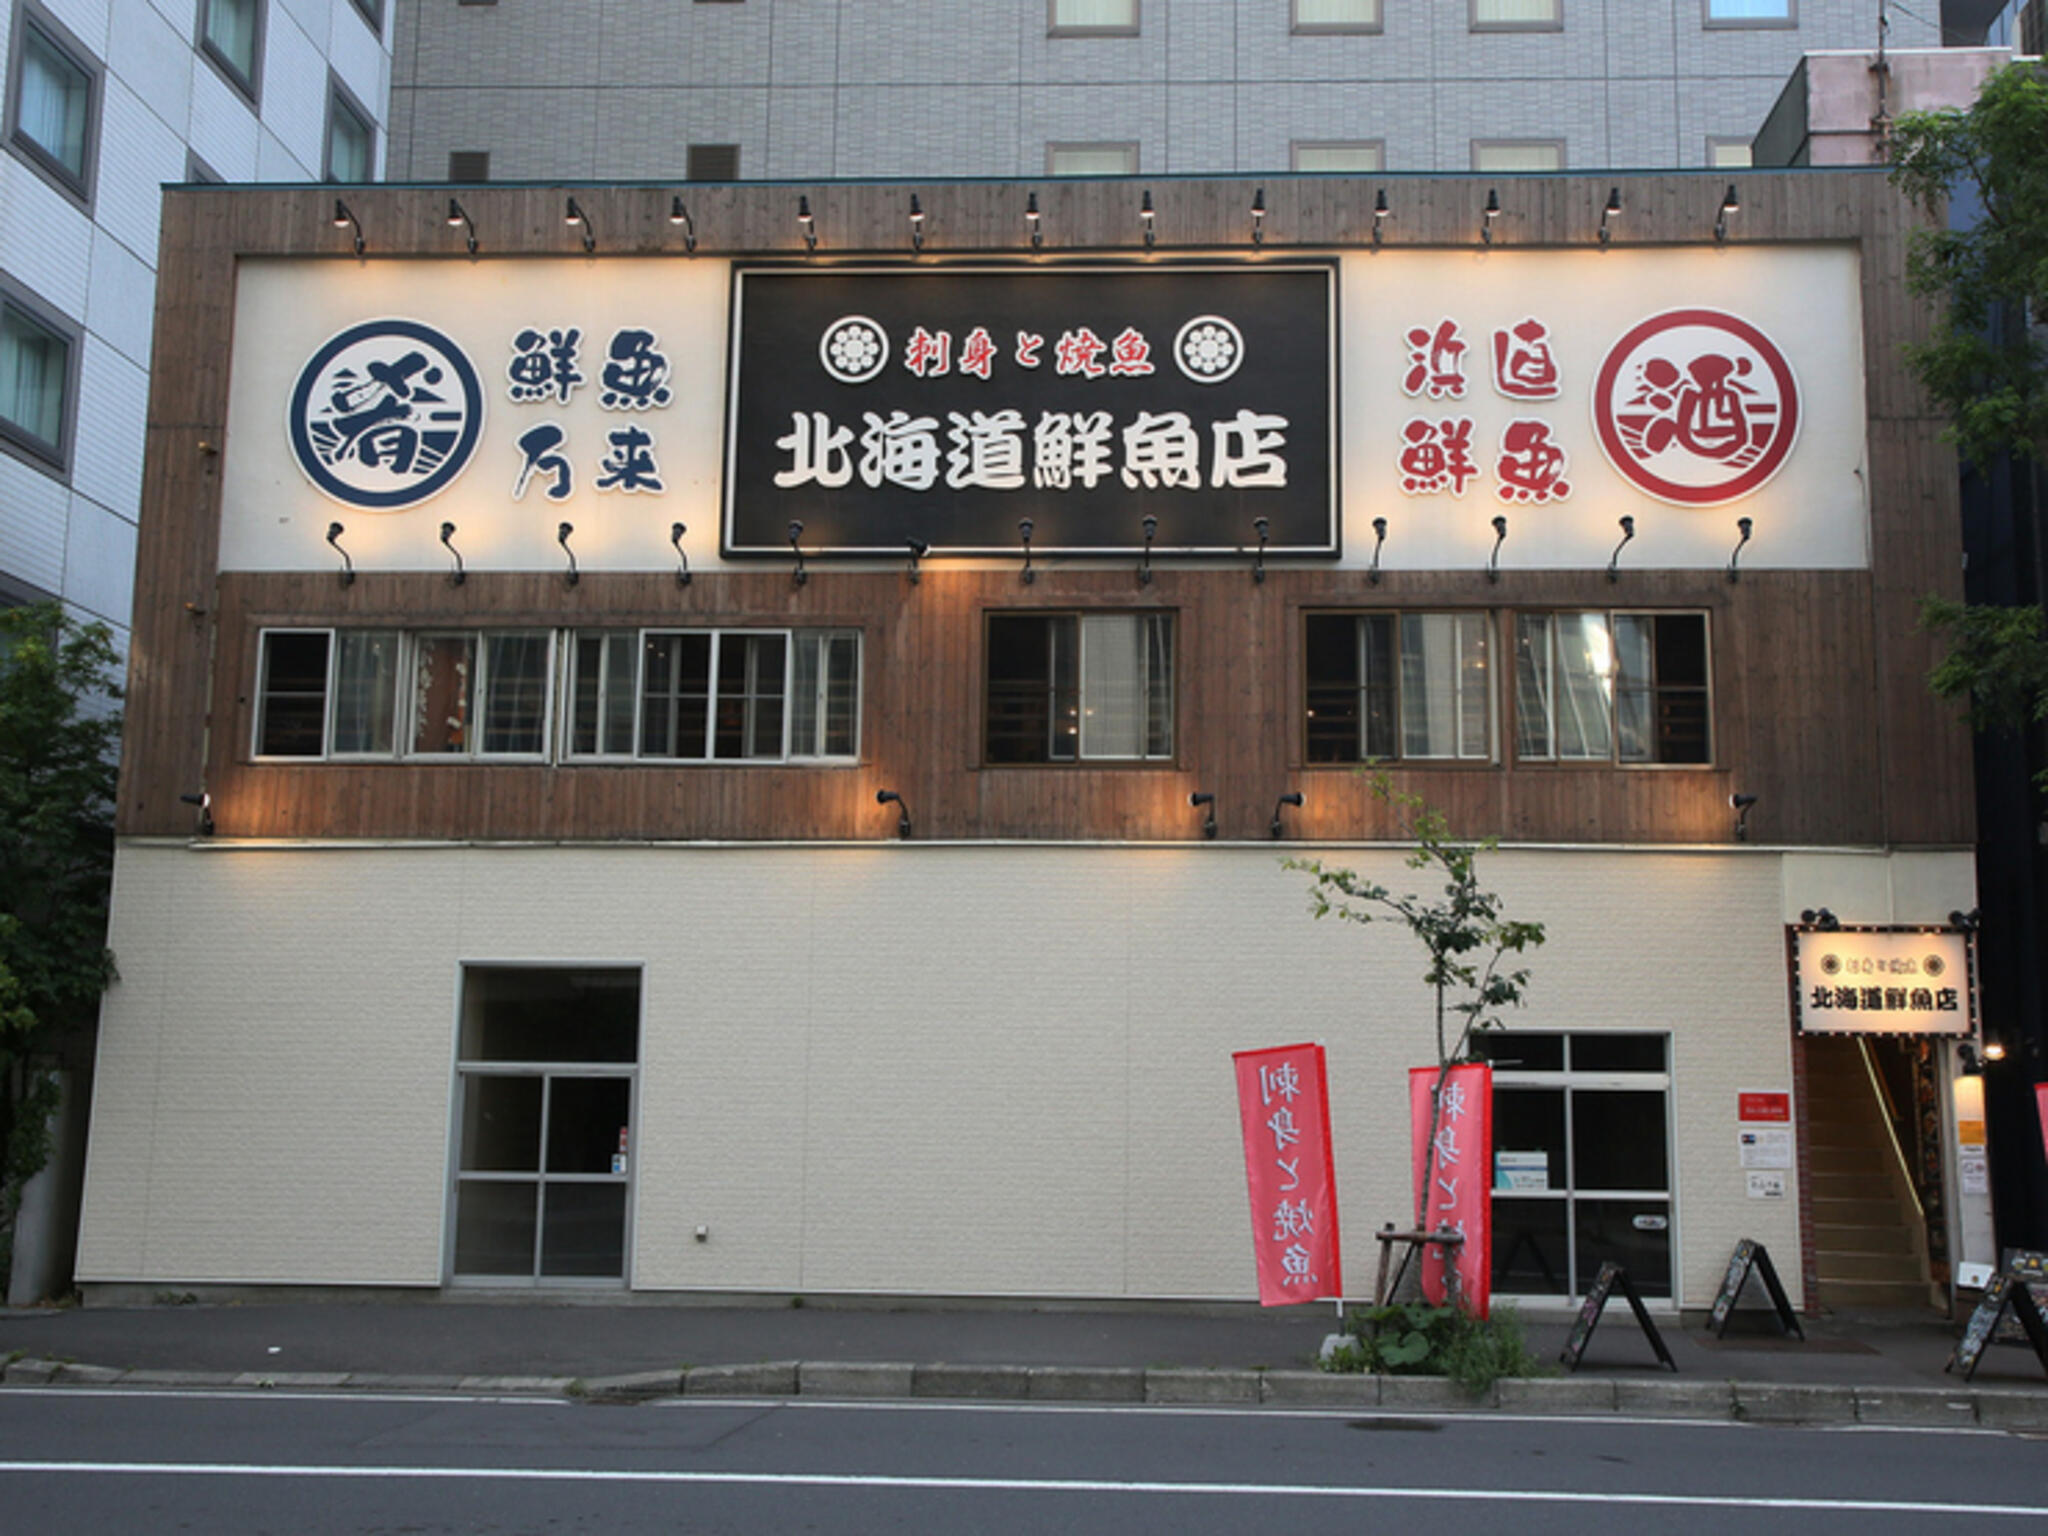 刺身と焼魚北海道鮮魚店 北口店の代表写真3